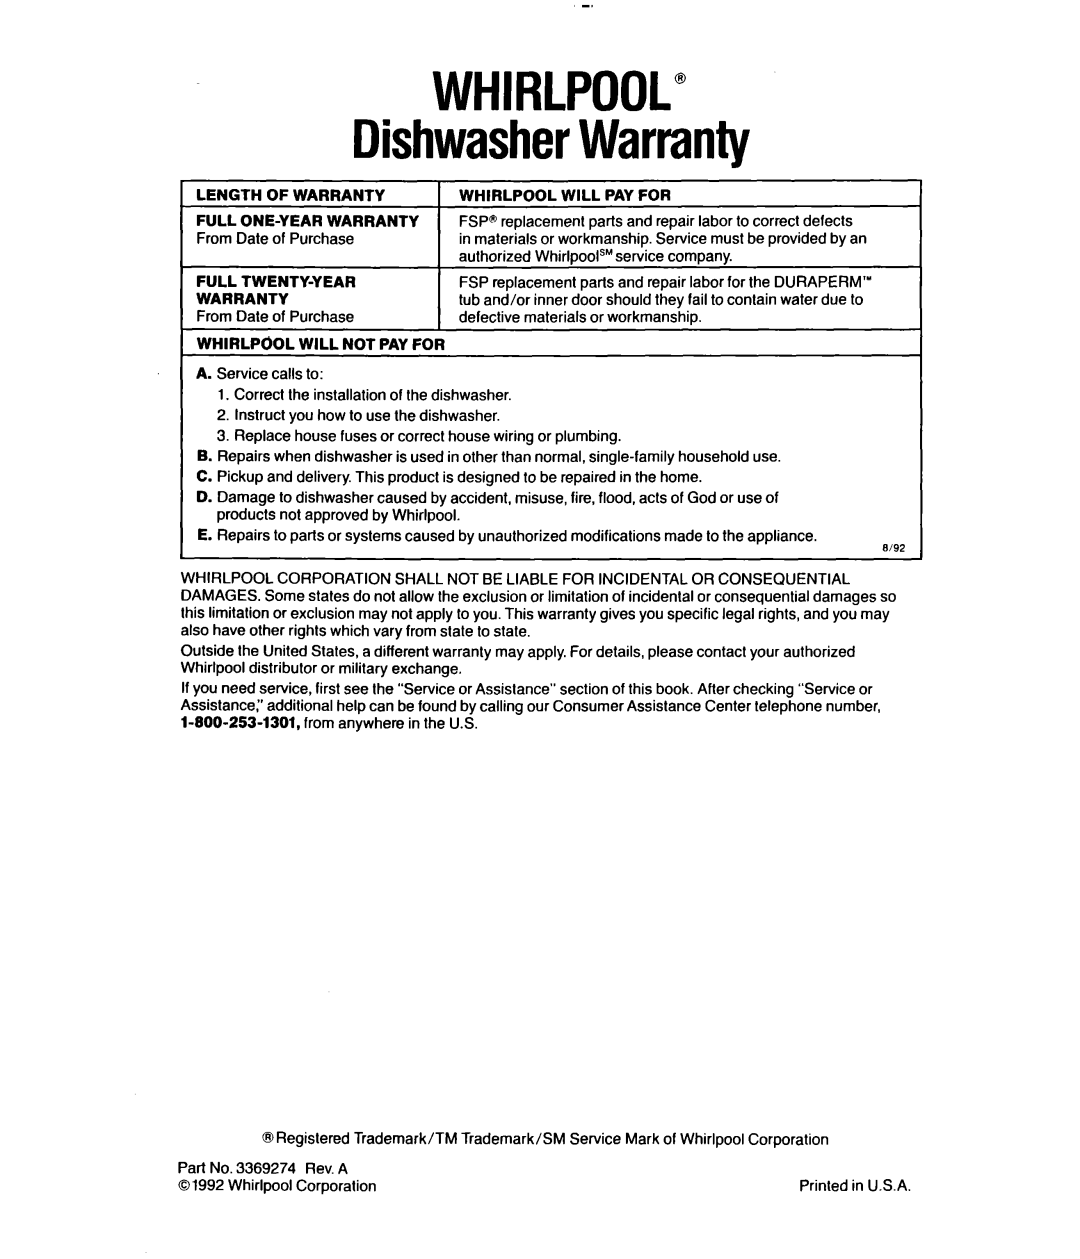 Whirlpool 8400 Series, 8300 Series manual WHIRLPOOL” DishwasherWarranty 